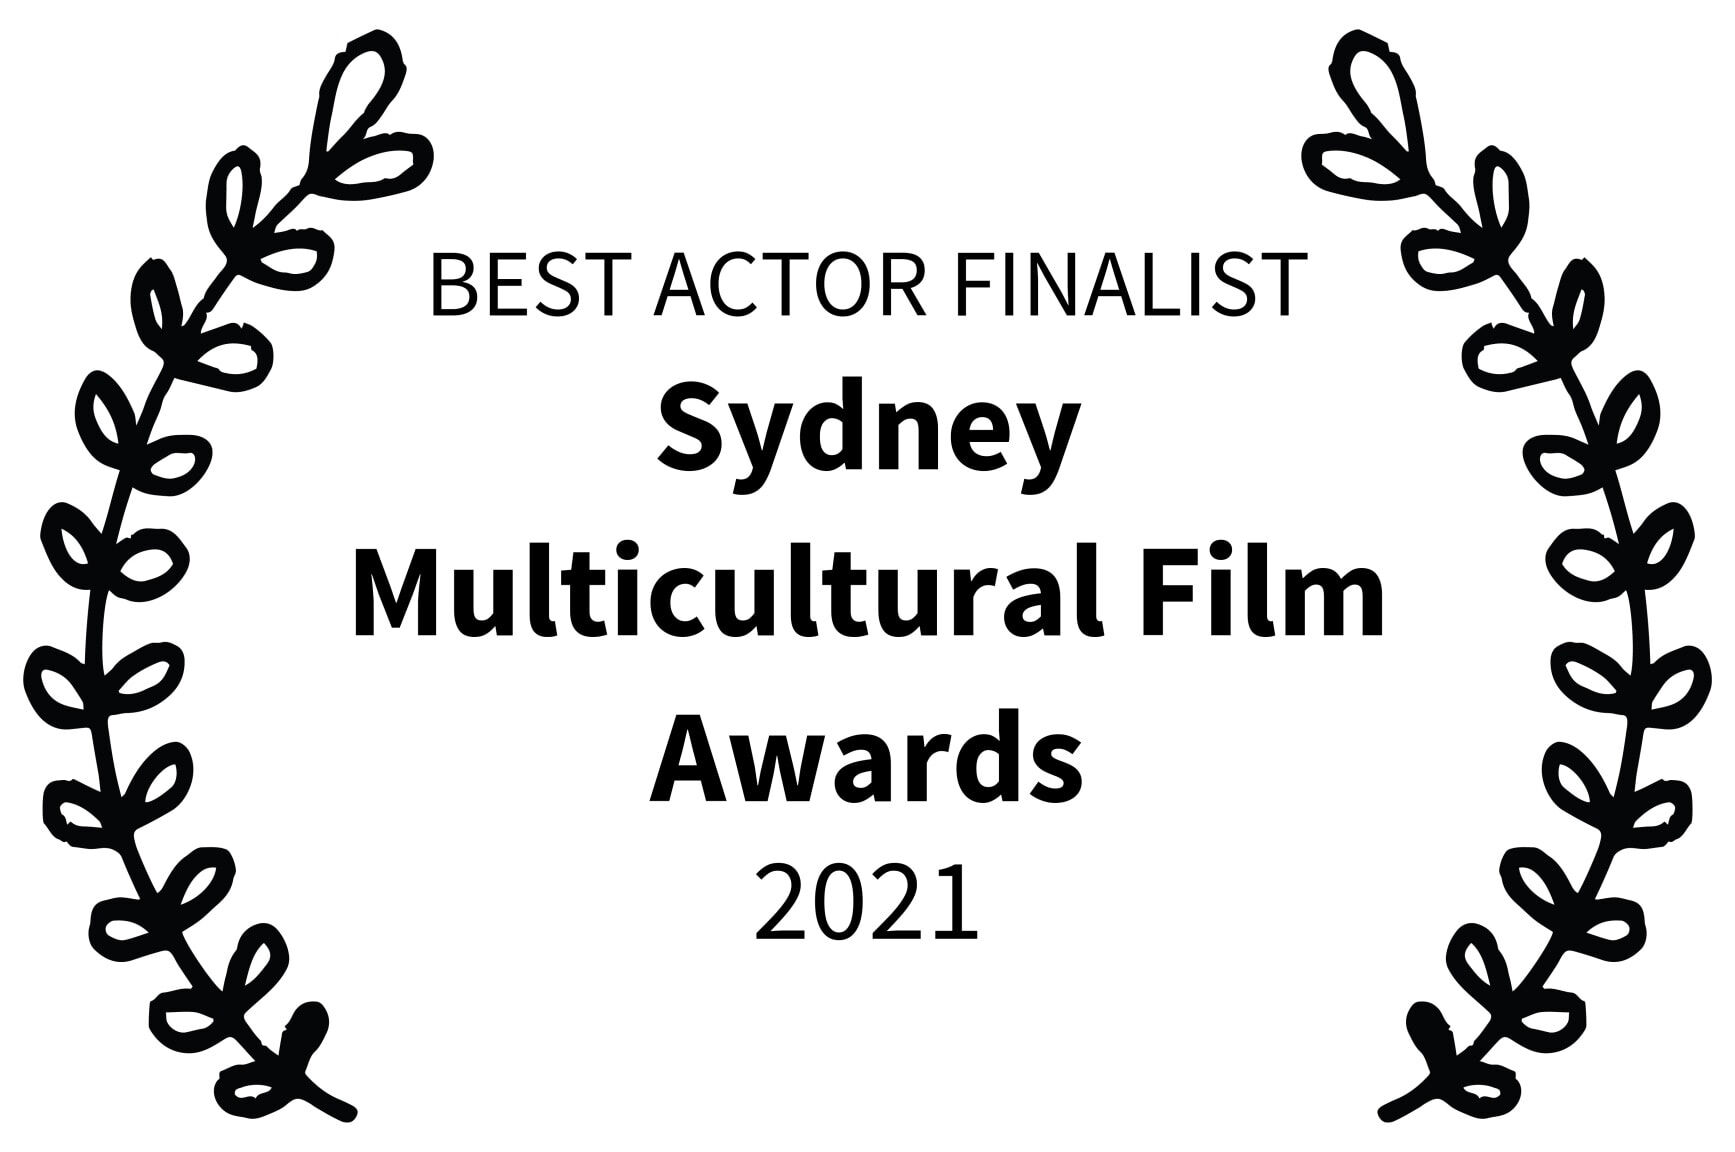 BEST ACTOR FINALIST - Sydney Multicultural Film Awards - 2021